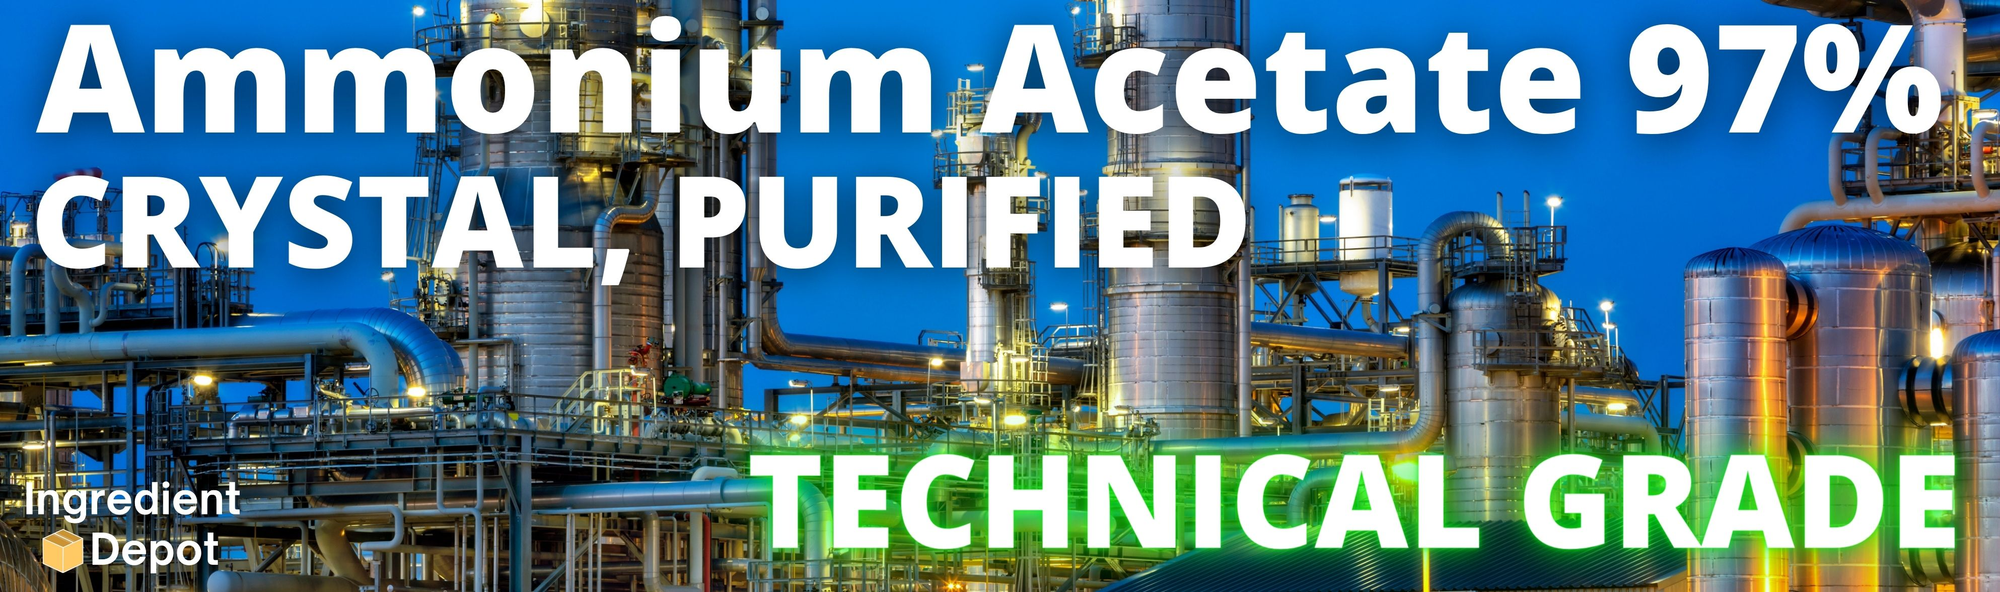 Ingredient Depot Ammonium Acetate Purified Technical Grade